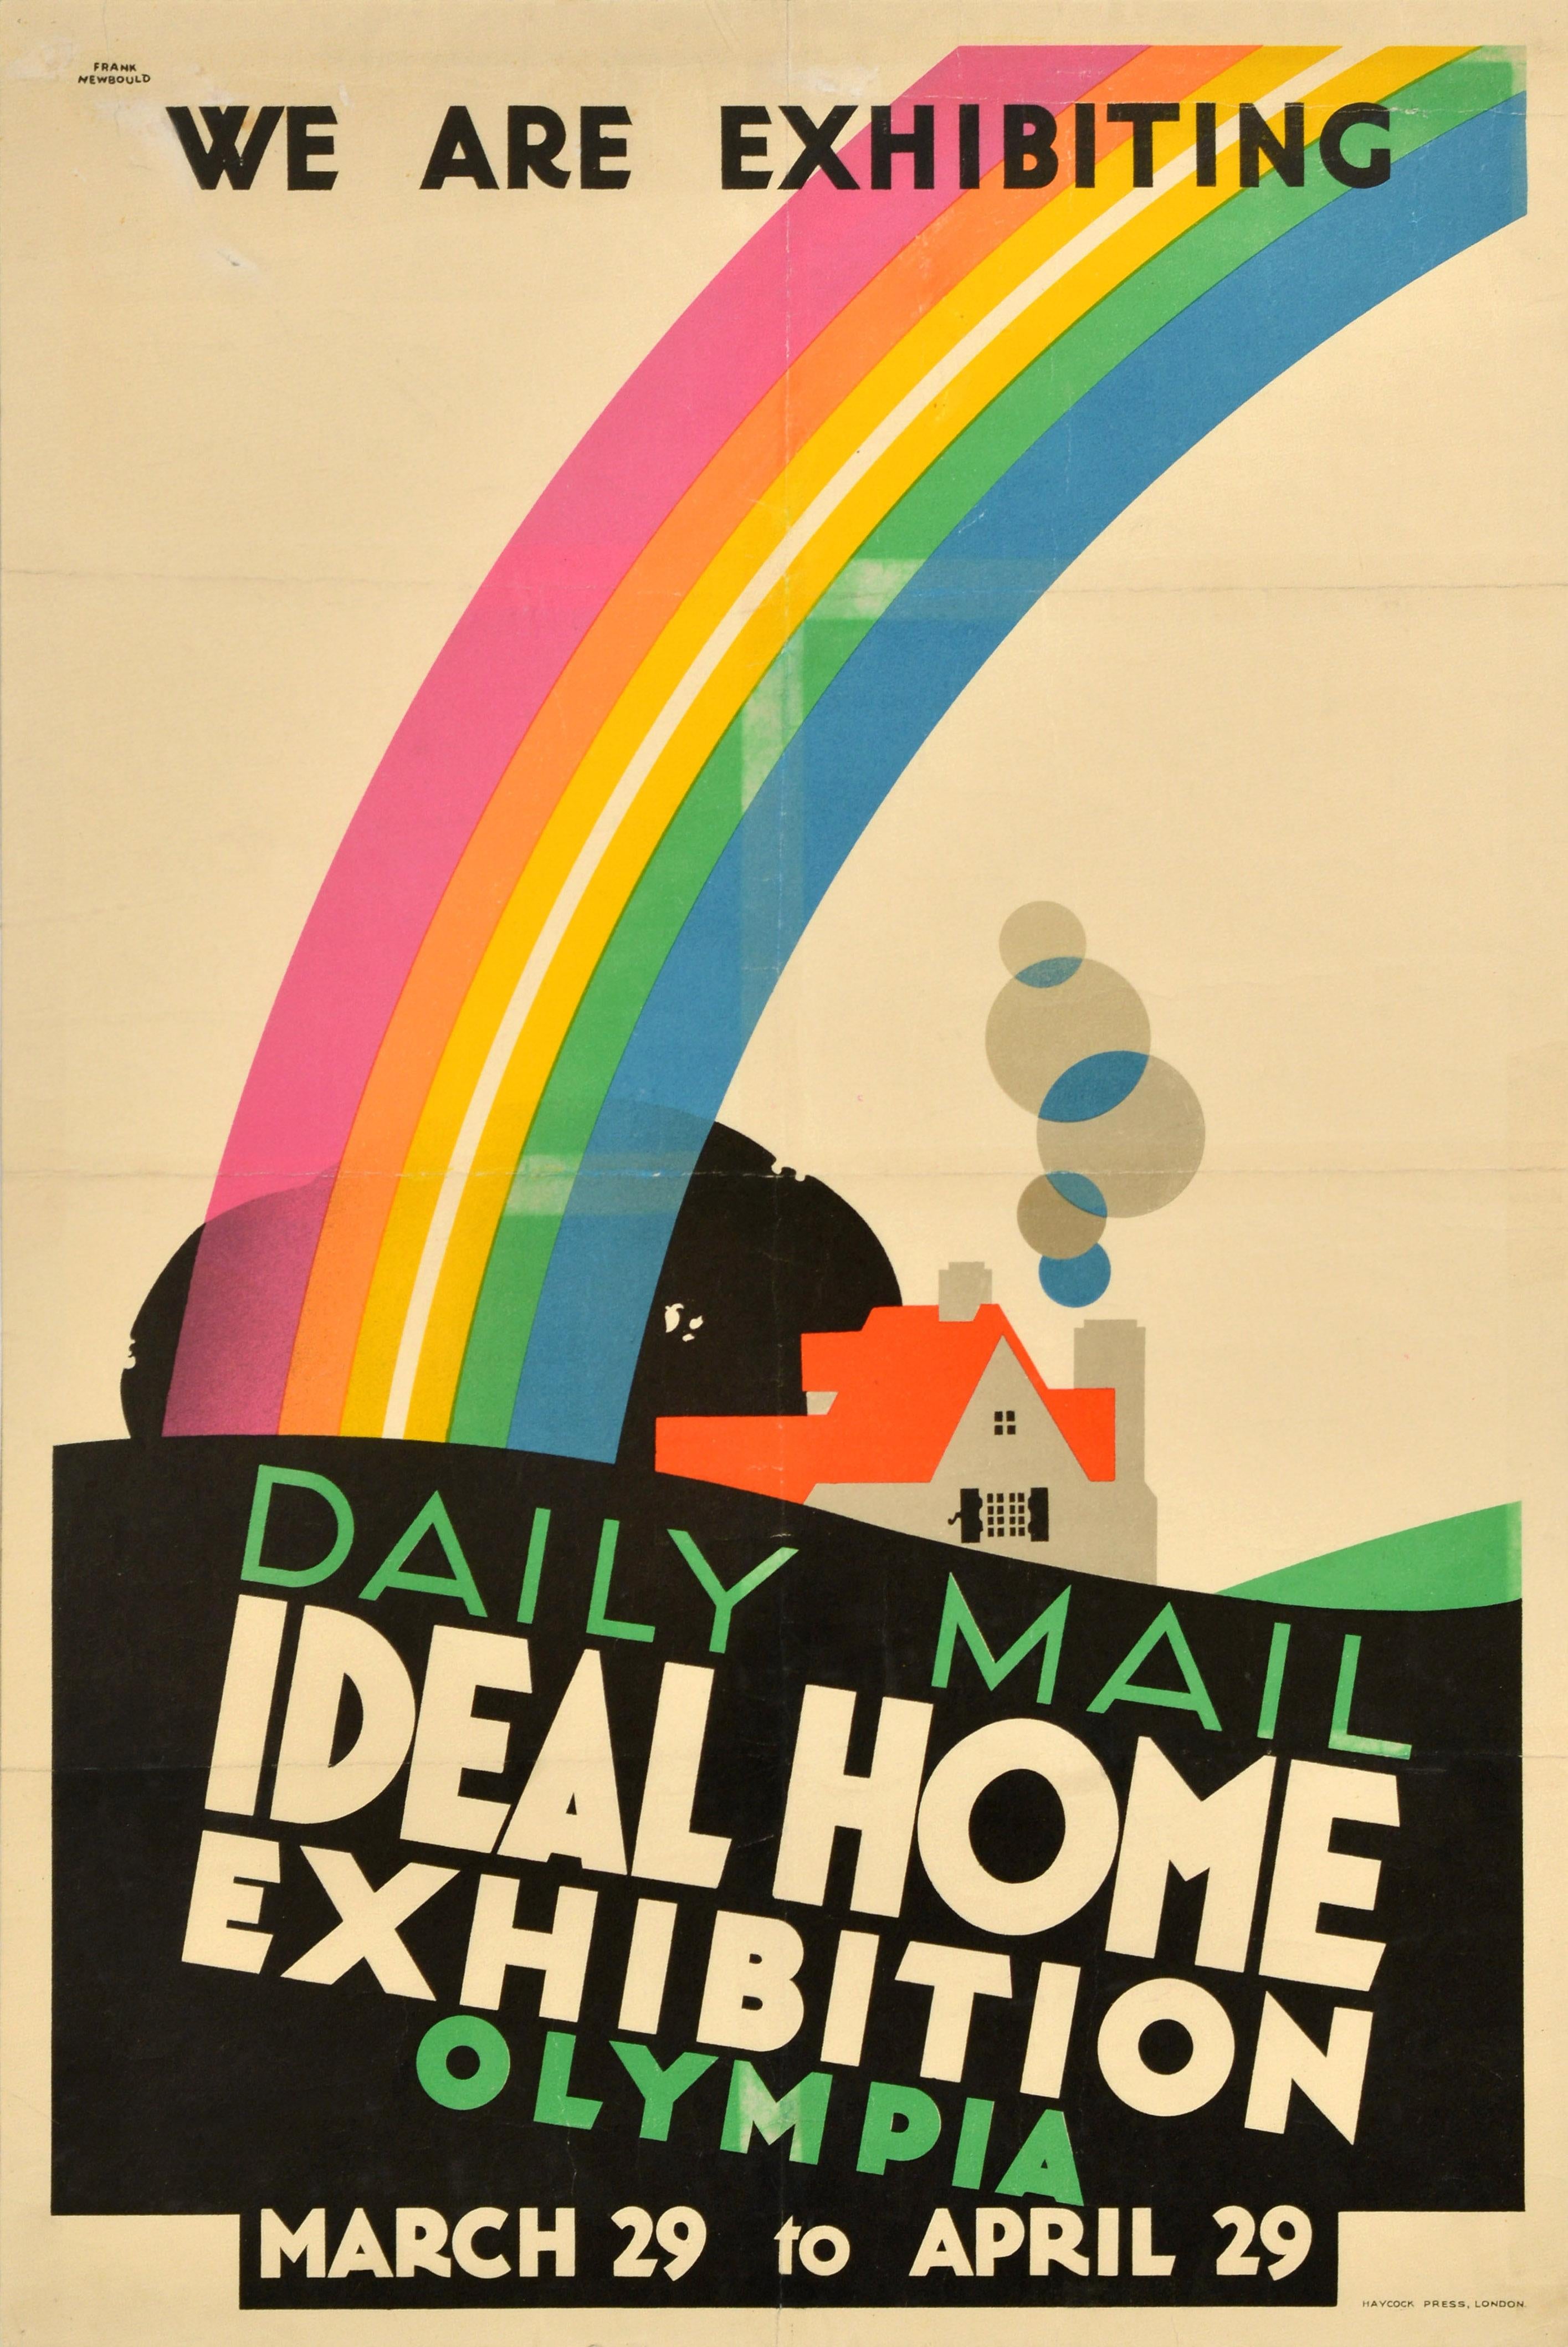 Frank Newbould Print – Original-Vintage-Werbeplakat Ideal Home Exhibition Daily Mail Olympia, Original